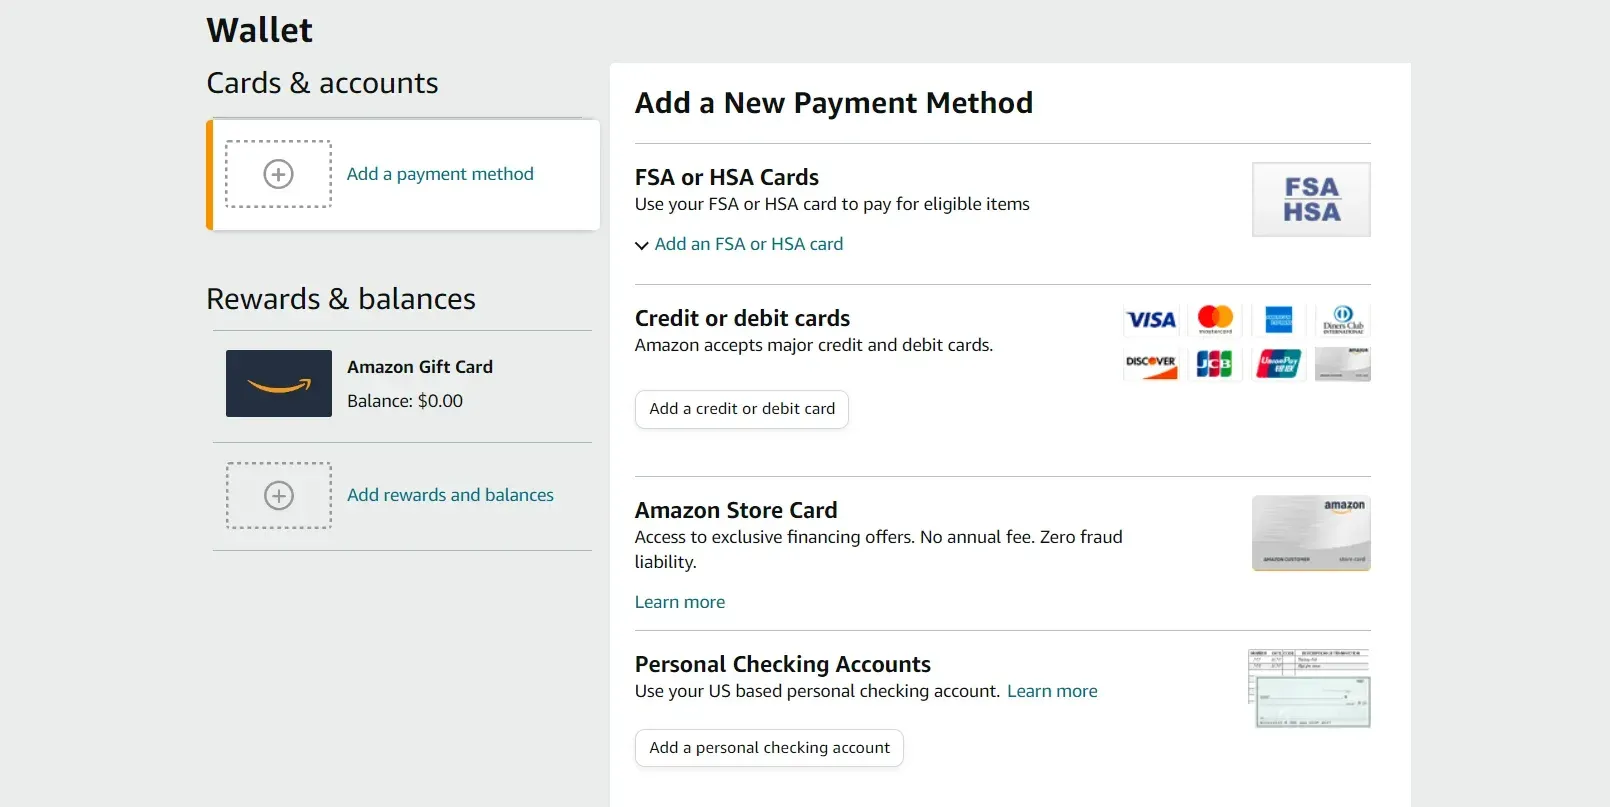 Add a credit or debit card in Amazon